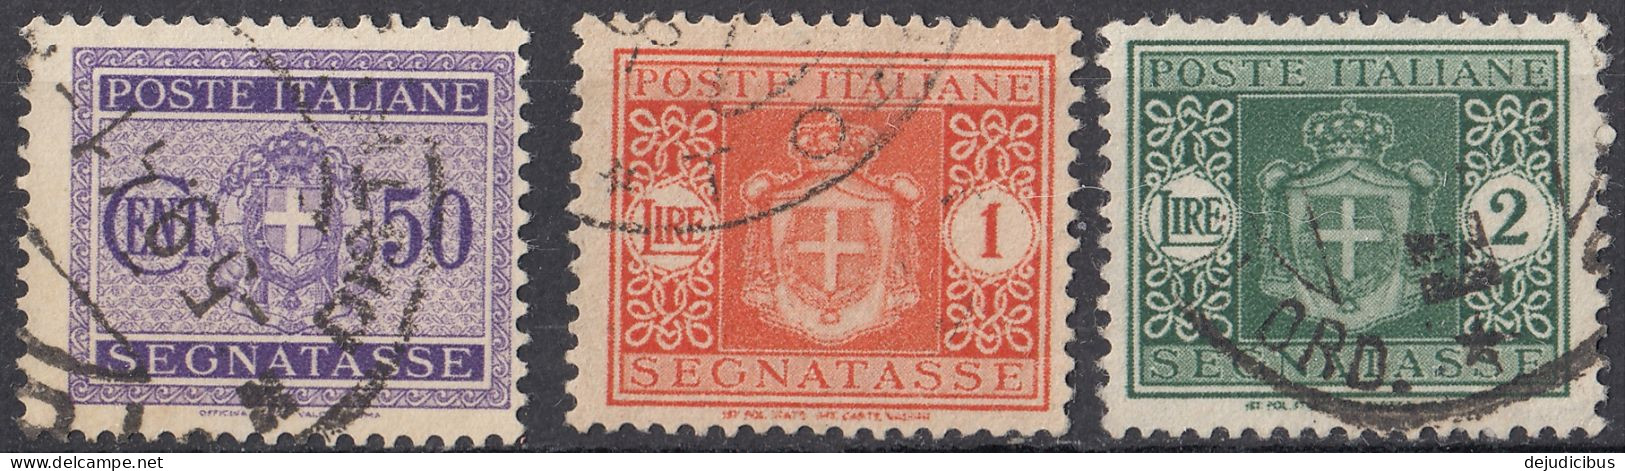 ITALIA - 1934 - Segnatasse -  Lotto Di 3 Valori Usati: Yvert  34, 36 E 37. - Segnatasse